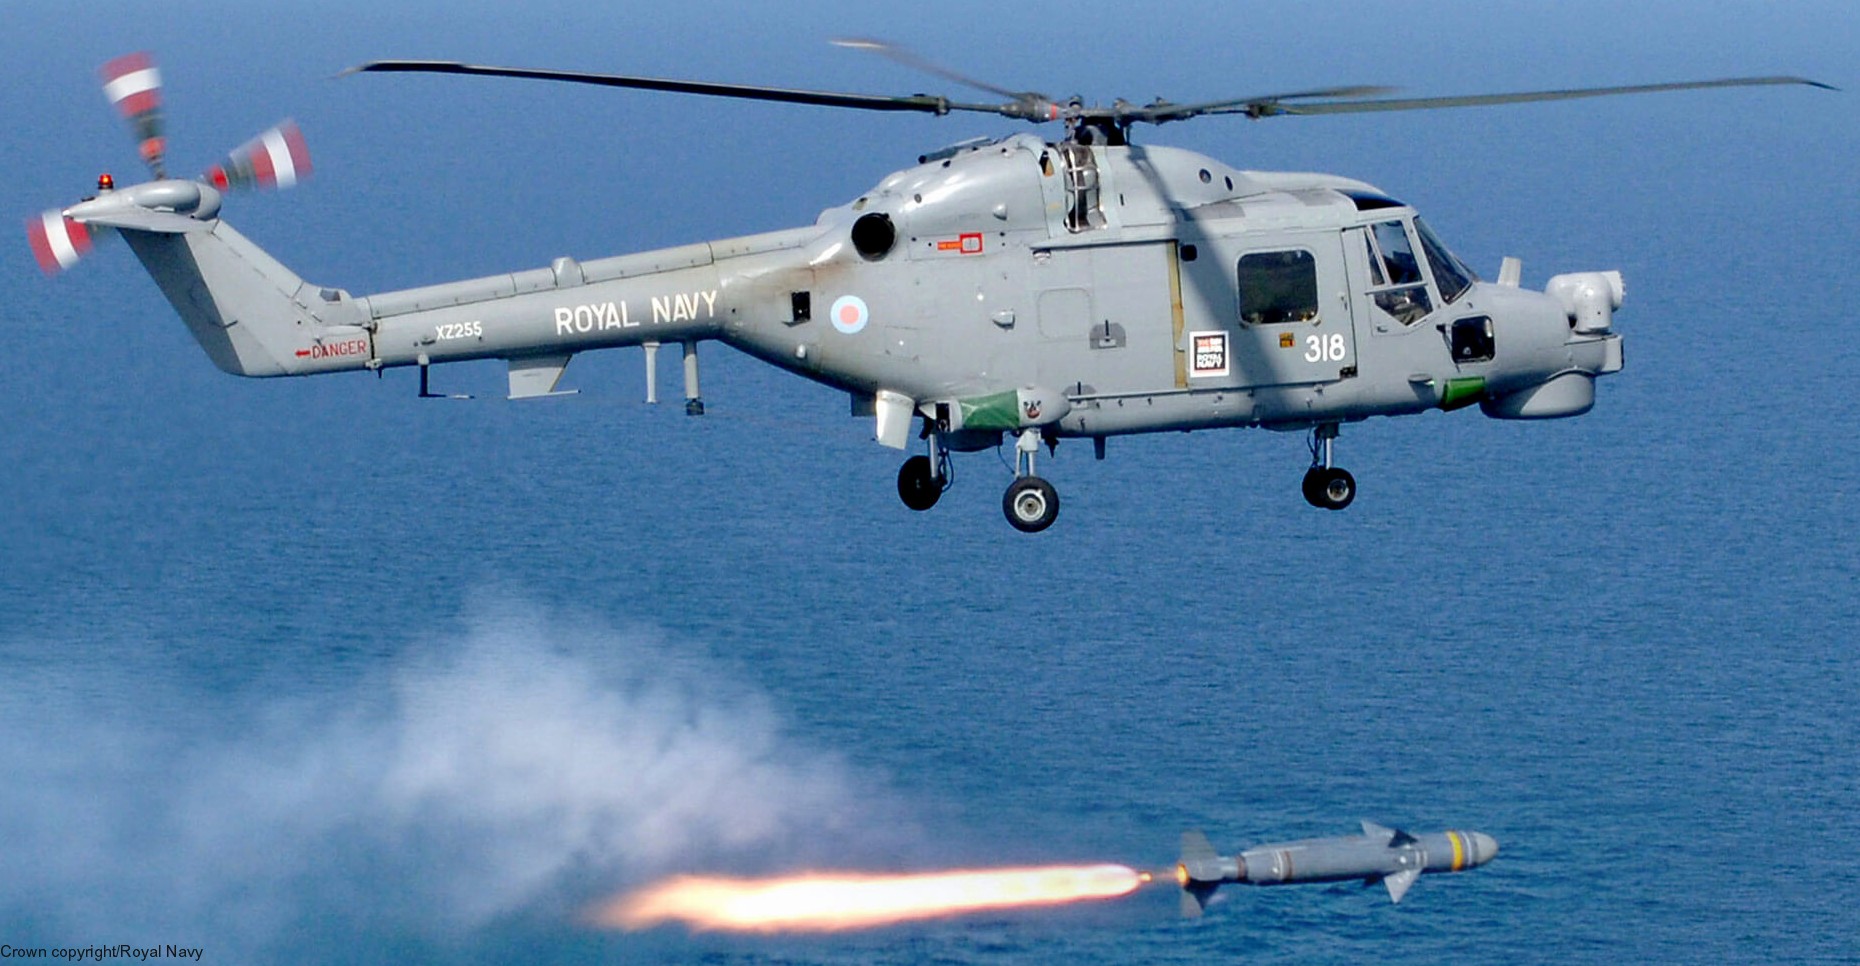 lynx hma.8 naval helicopter royal navy westland nas squadron rnas 02 sea skua anti-ship missile